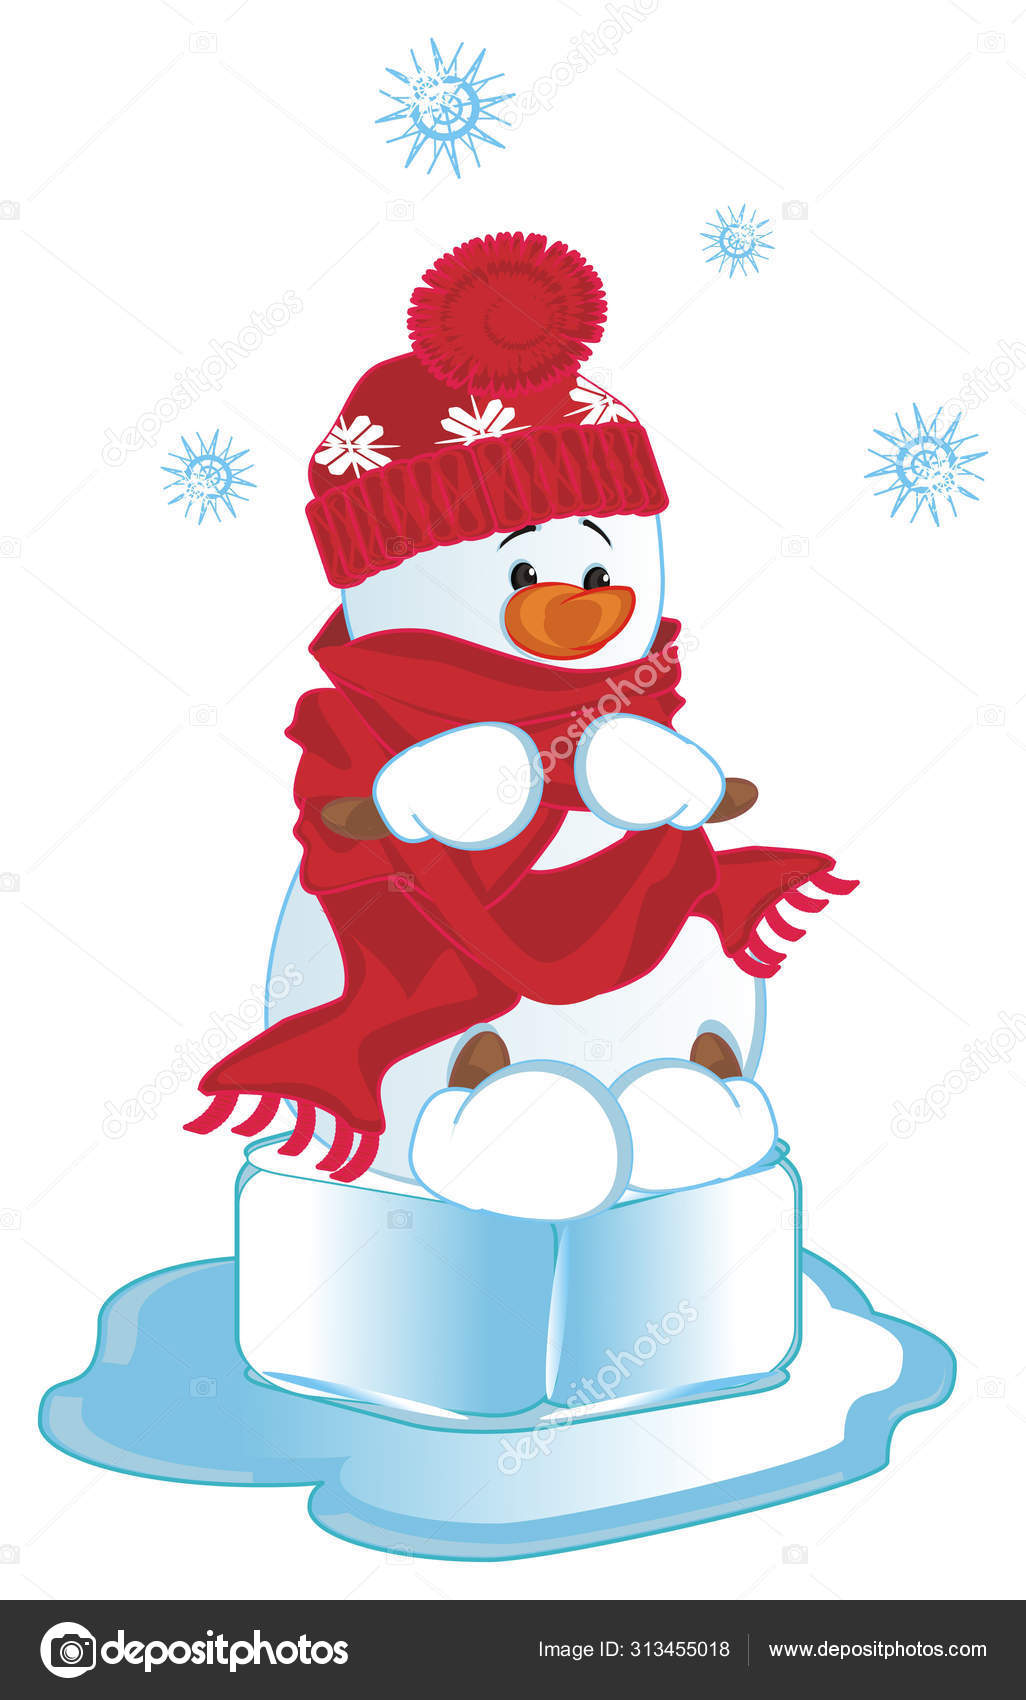 https://st4.depositphotos.com/5258347/31345/i/1600/depositphotos_313455018-stock-illustration-snowman-winter-time-ice-cube.jpg